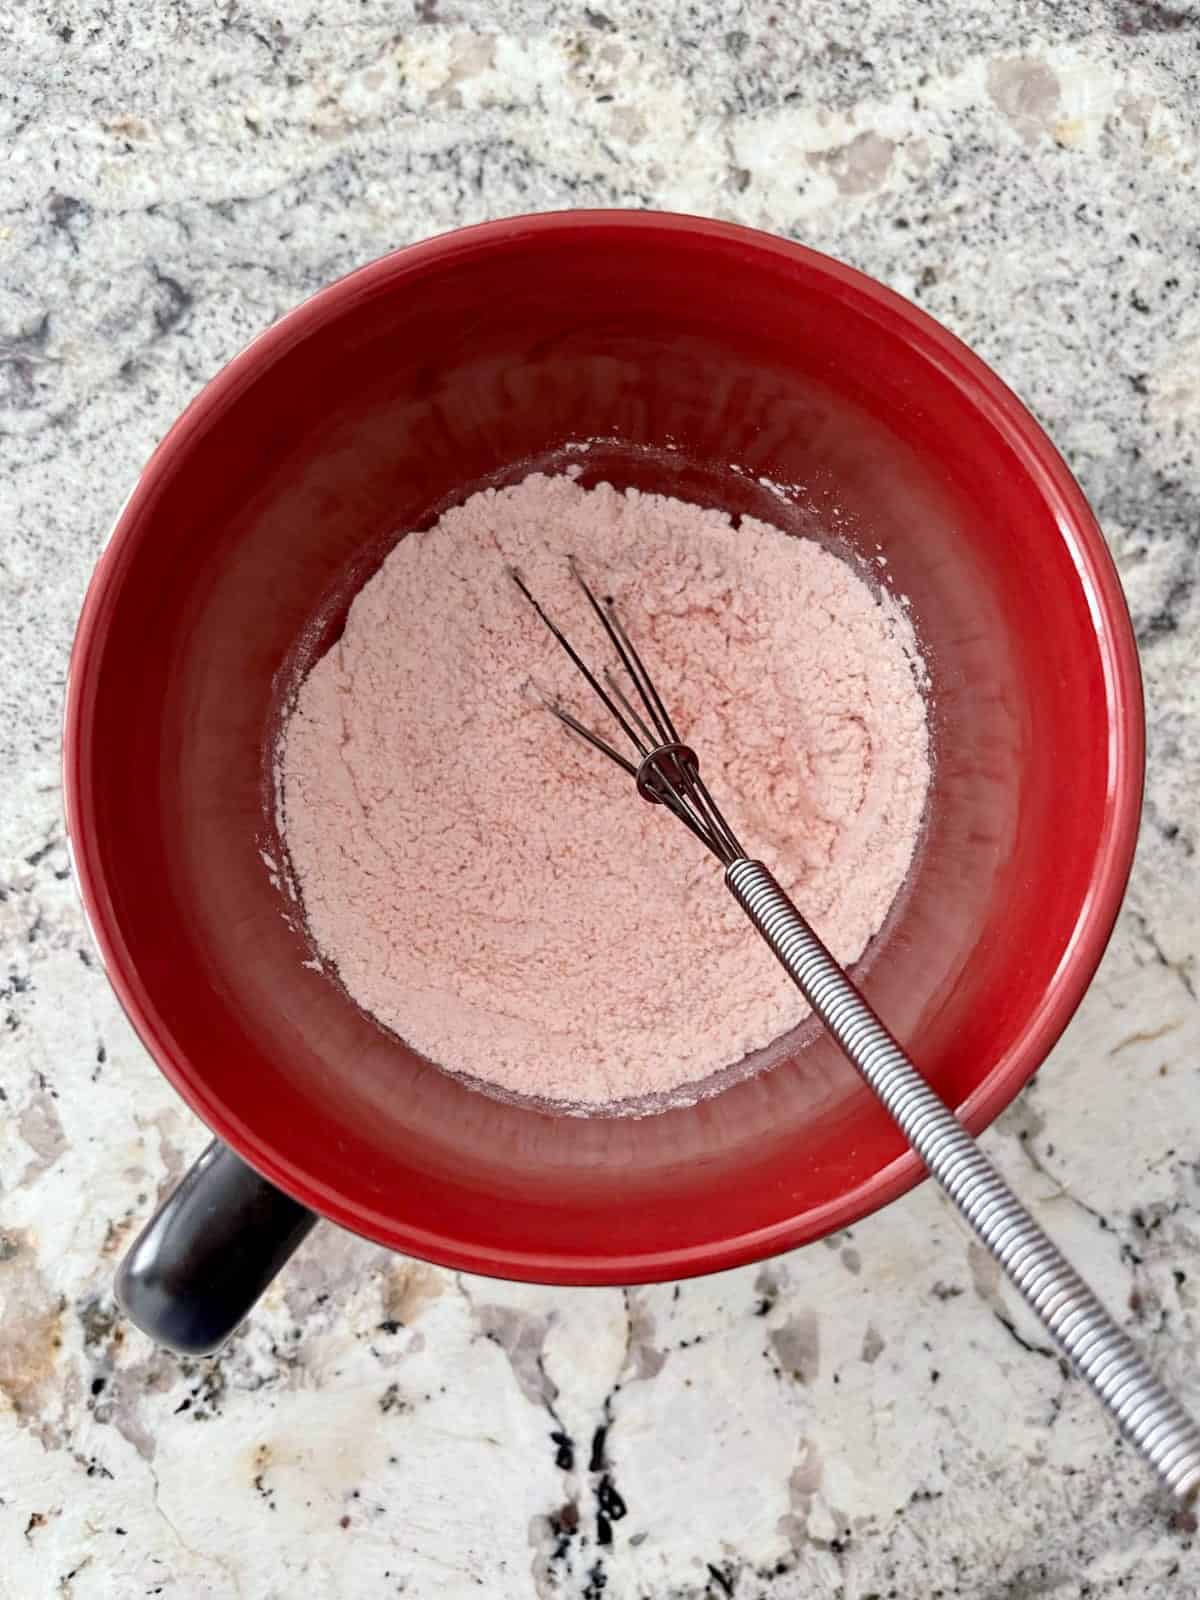 Whisking flour, baking powder, sweetener and raspberry Jell-o powder in large mug.